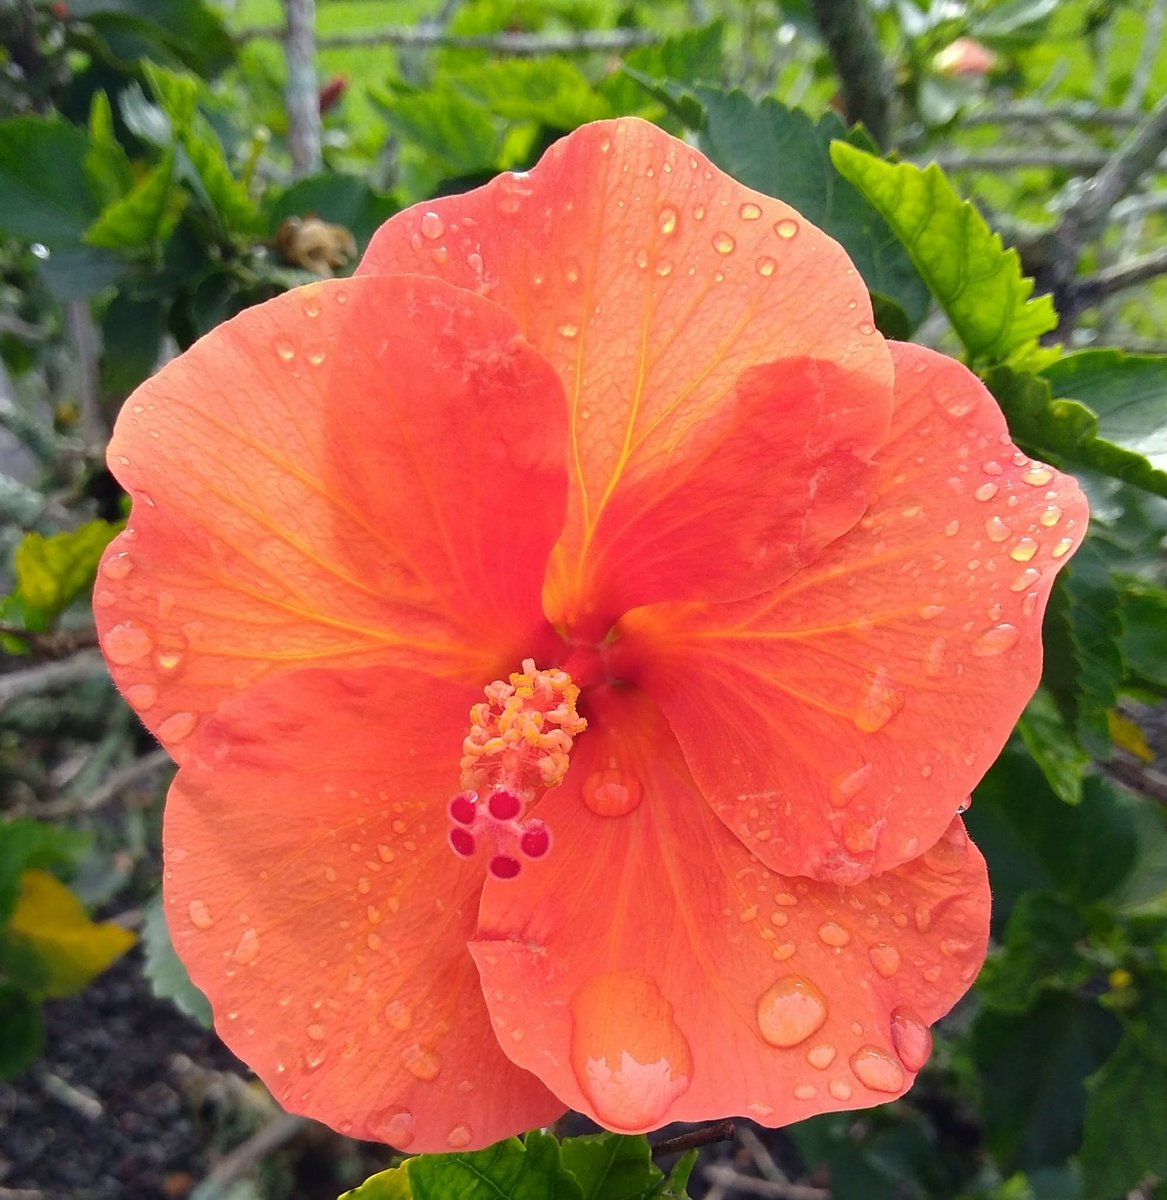 7th Order wishes our friends everywhere a great day from the Big Island of Hawaii!
#bigislandofhawaii #hawaiivolcanoesnationalpark #hawaiipictures #hawaii #danieljones #7thorder #picoftheday #indie #music #nature #photography #hibiscus #flowers #flowerpictures #hawaiilife #aloha